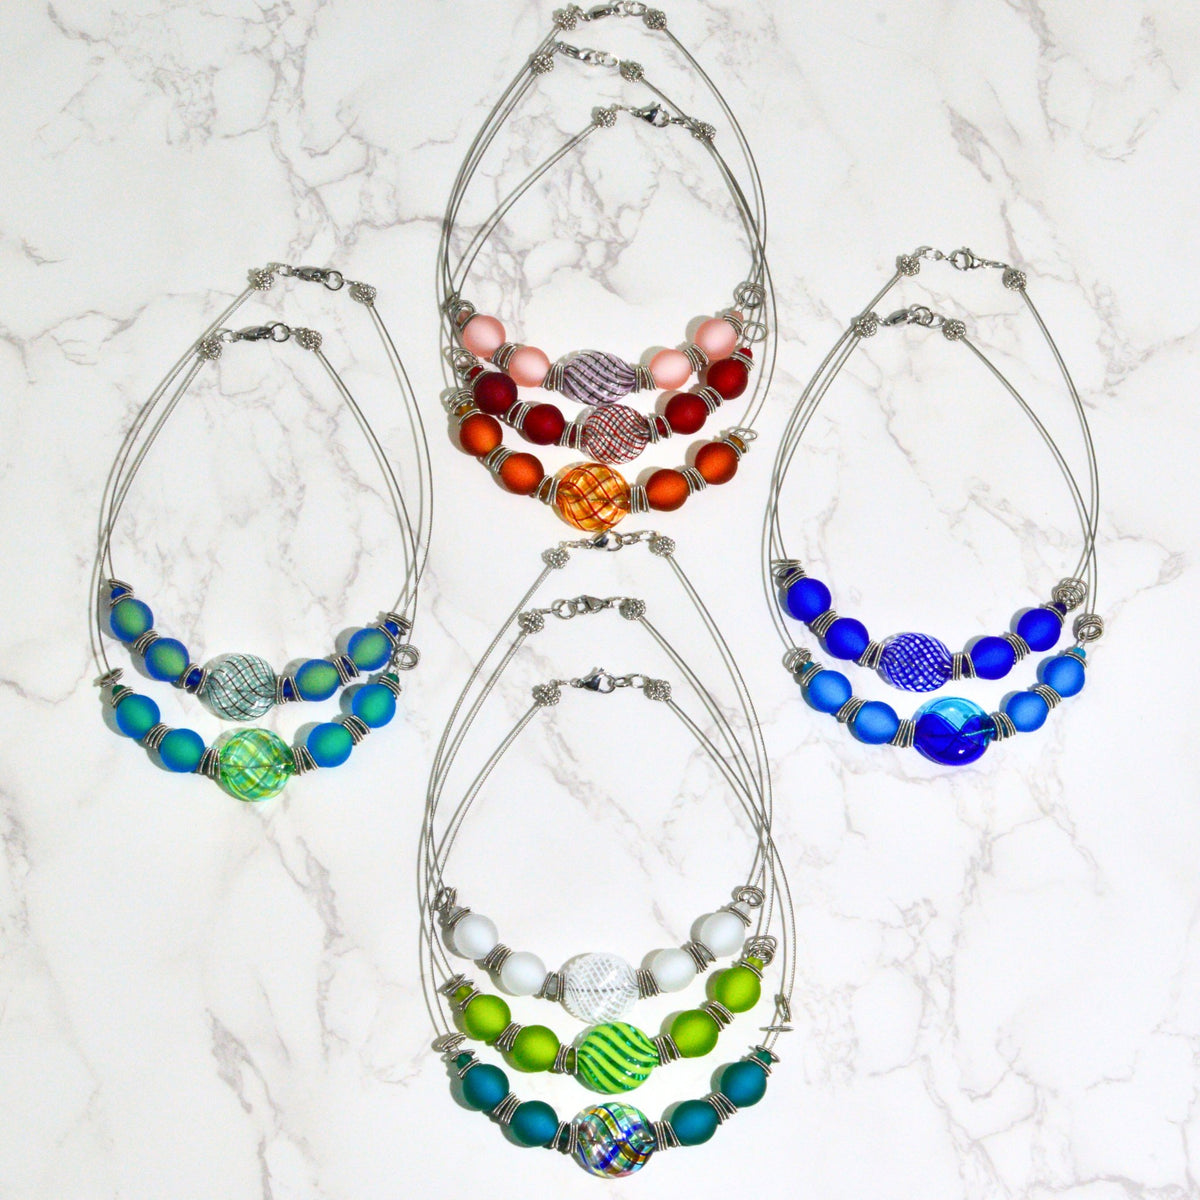 Monica1 Murano Glass Bead Statement Necklace, Made in Italy - My Italian Decor